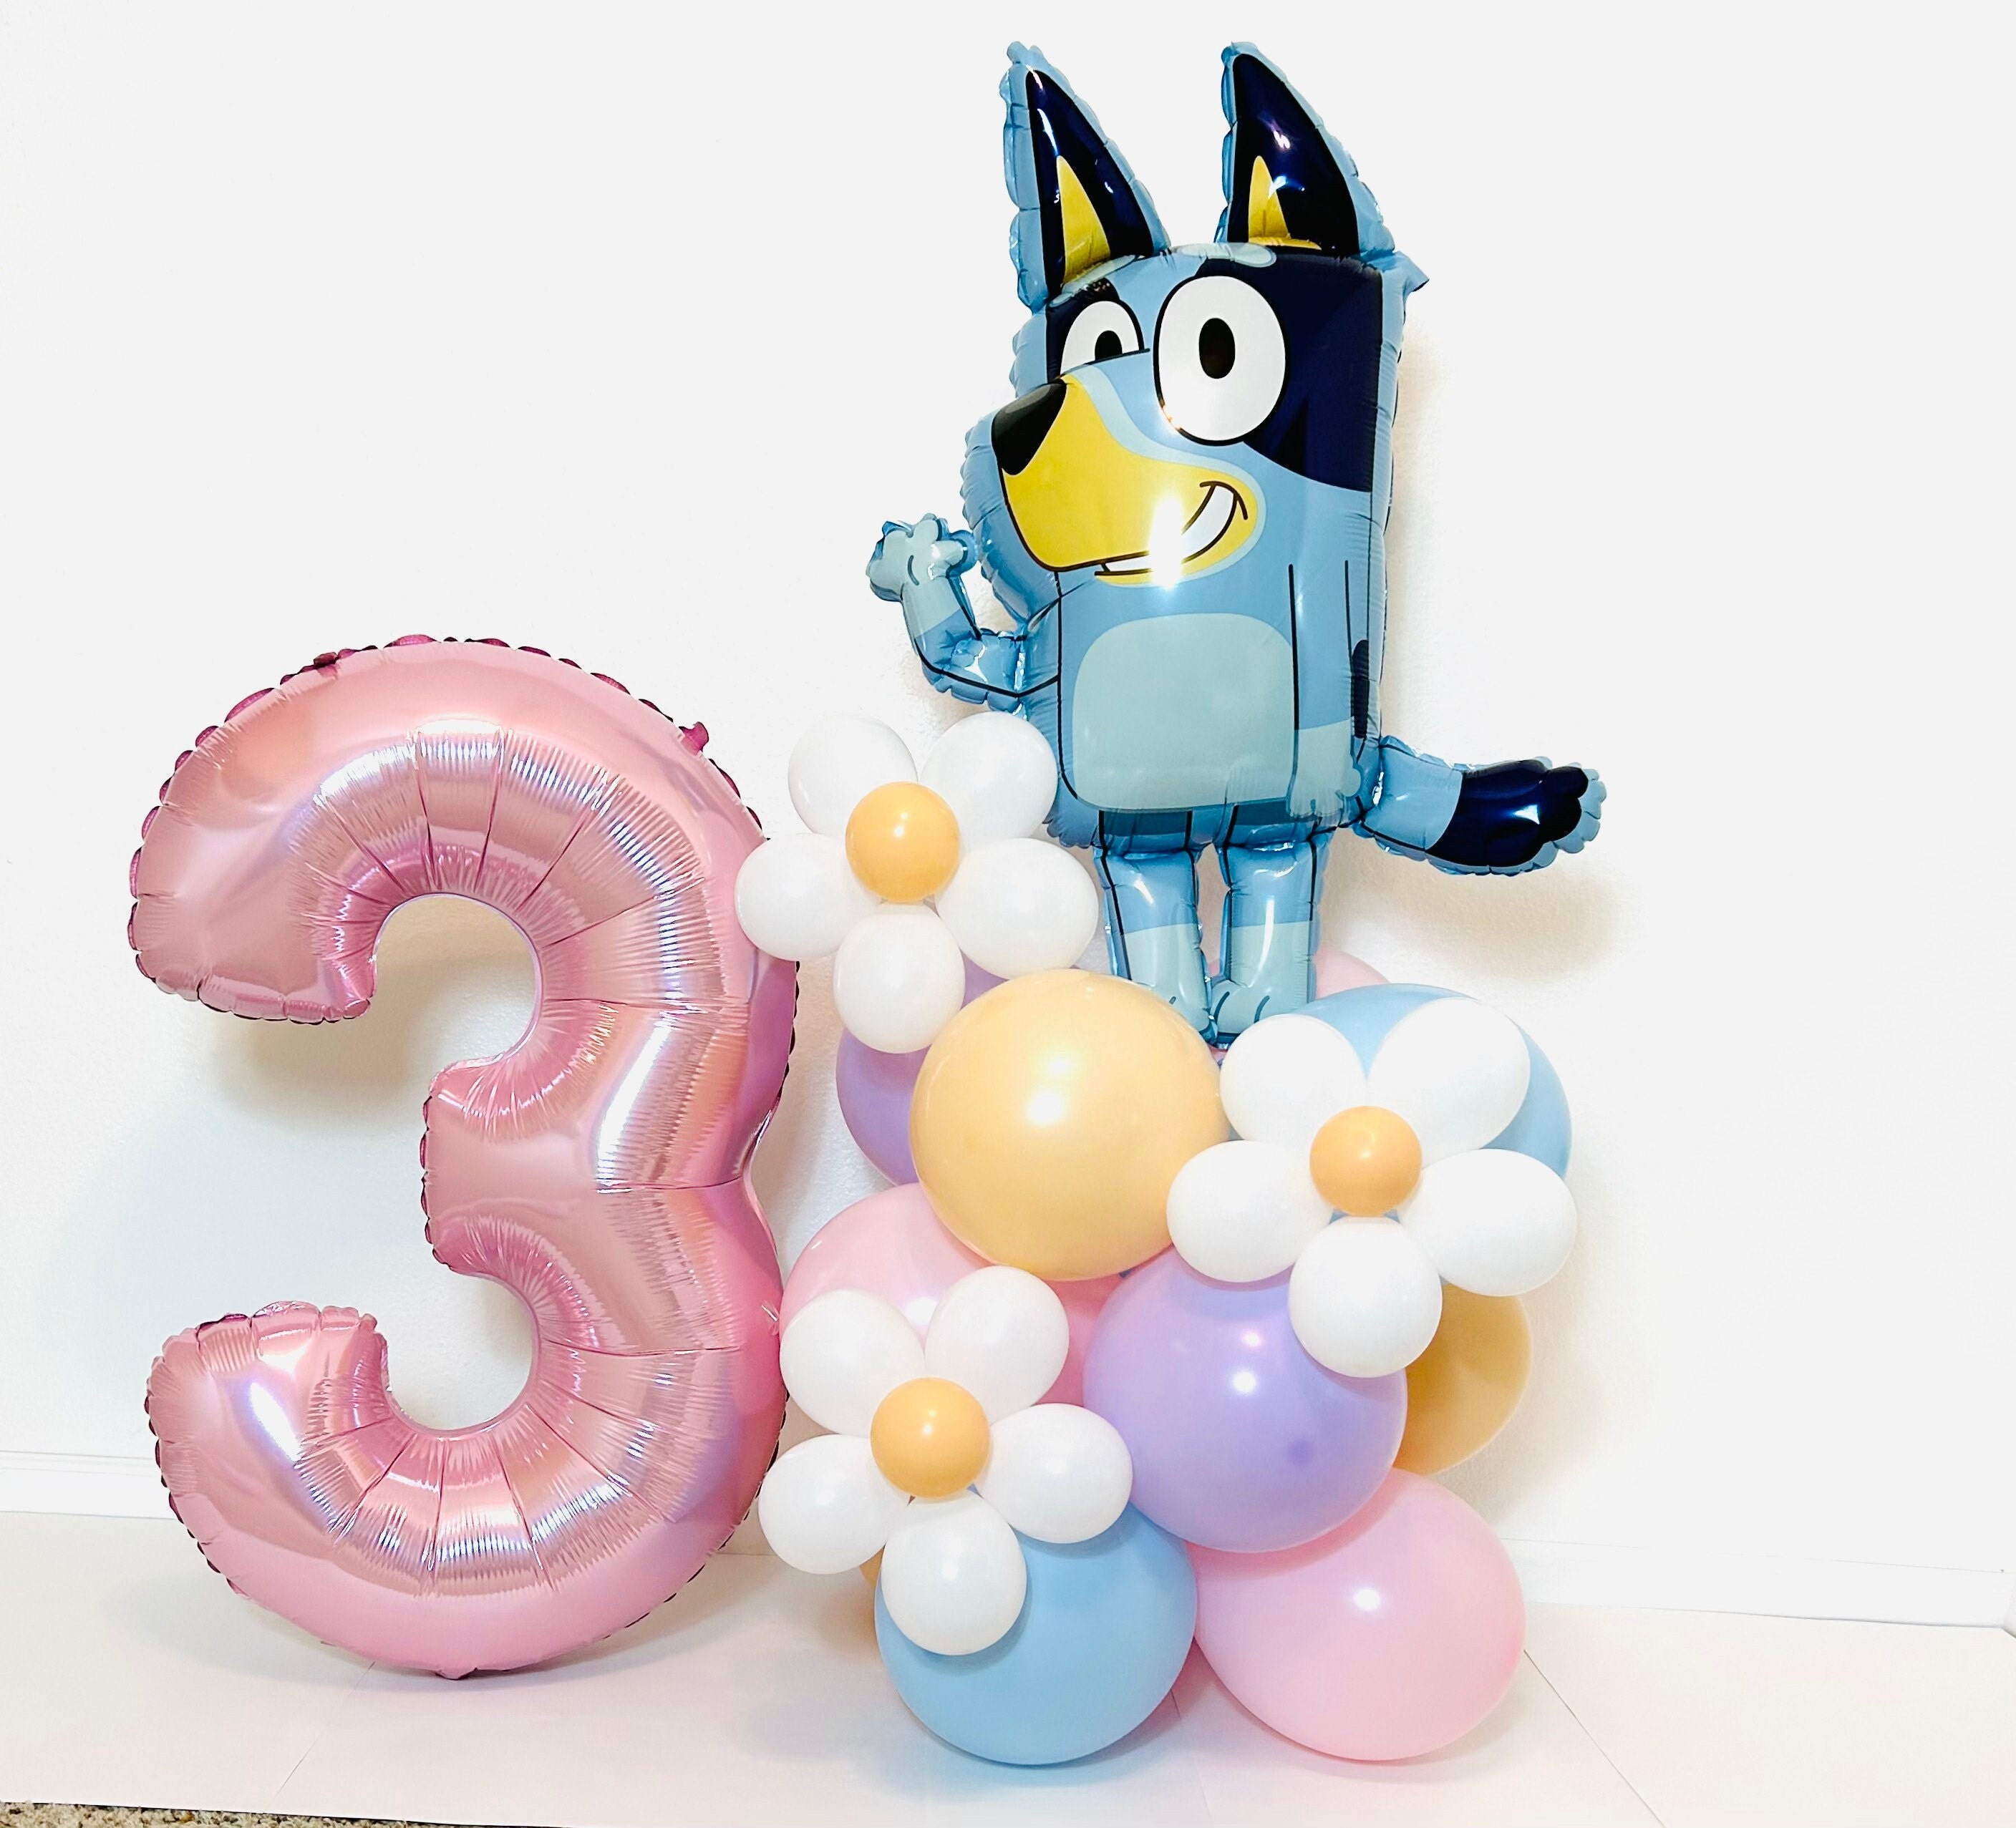 Pet Birthday Decoration Kit,, Dog Cat Birthday Balloons Blue Theme